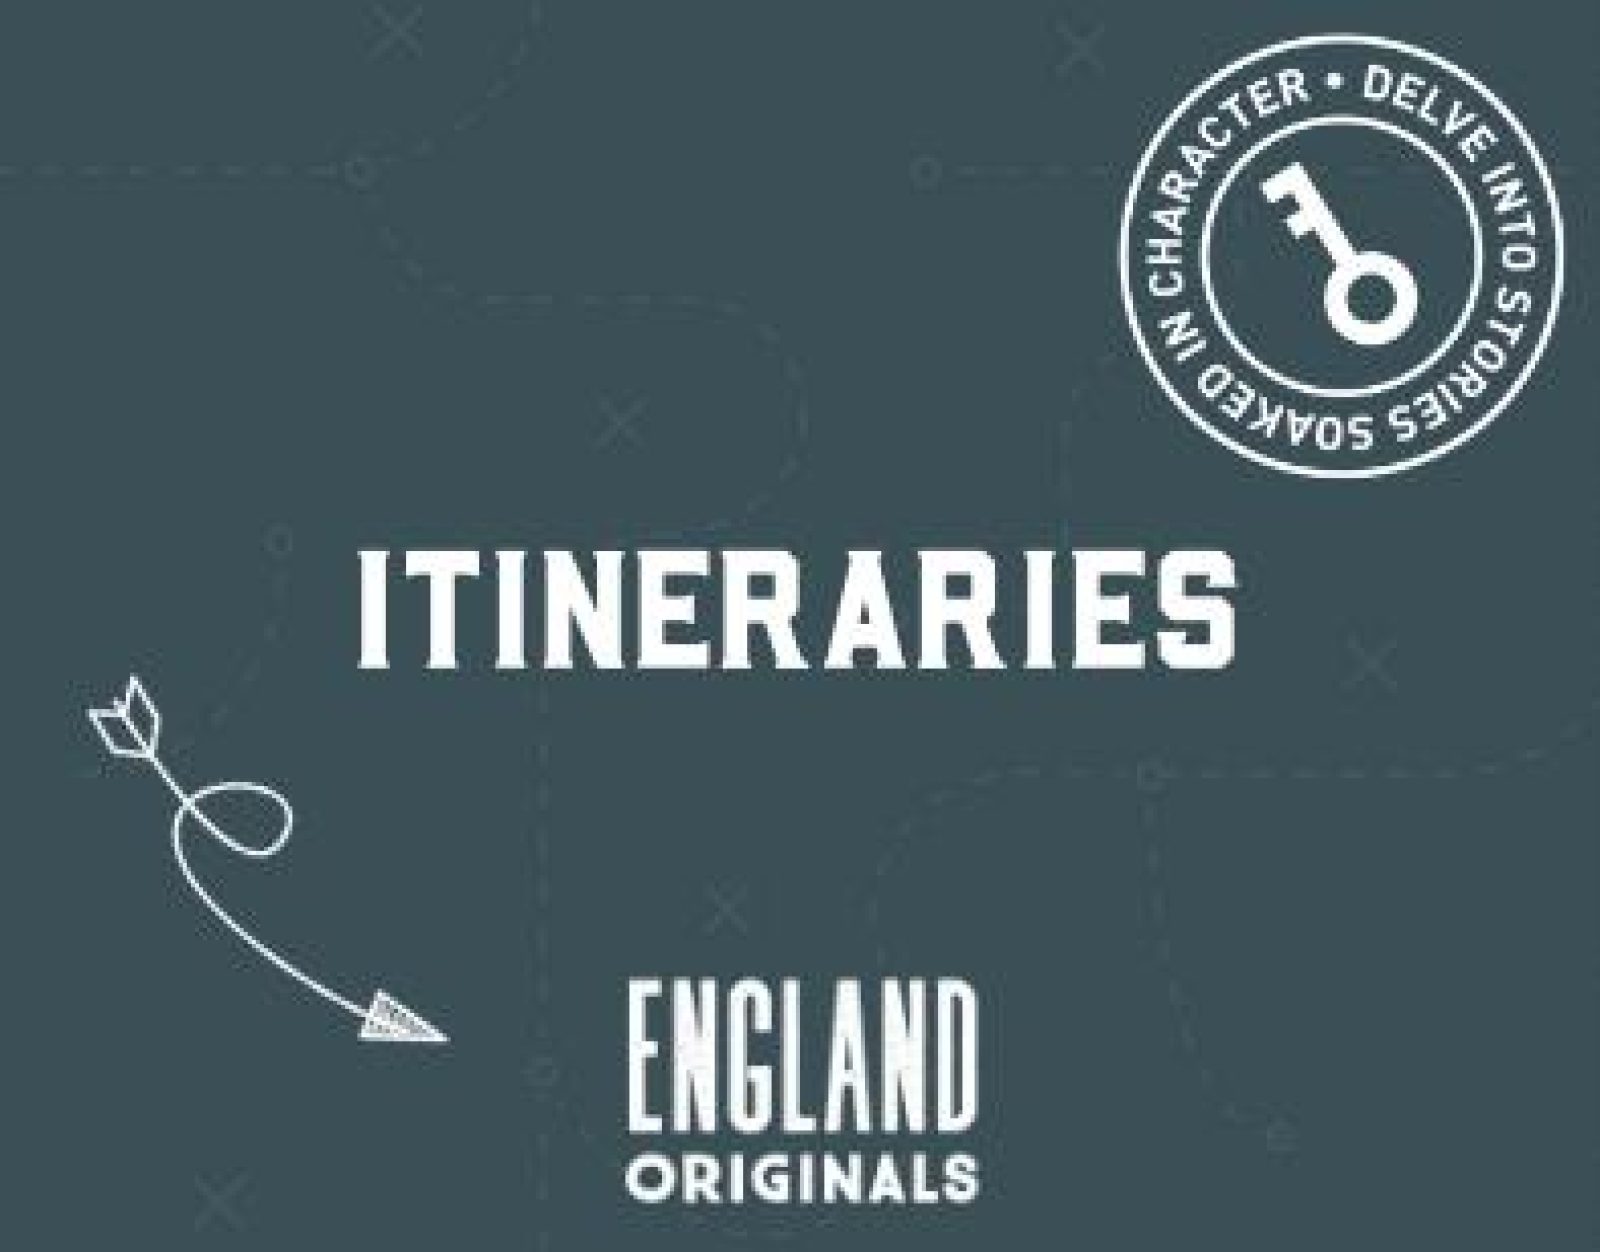 Explore England Originals Itineraries